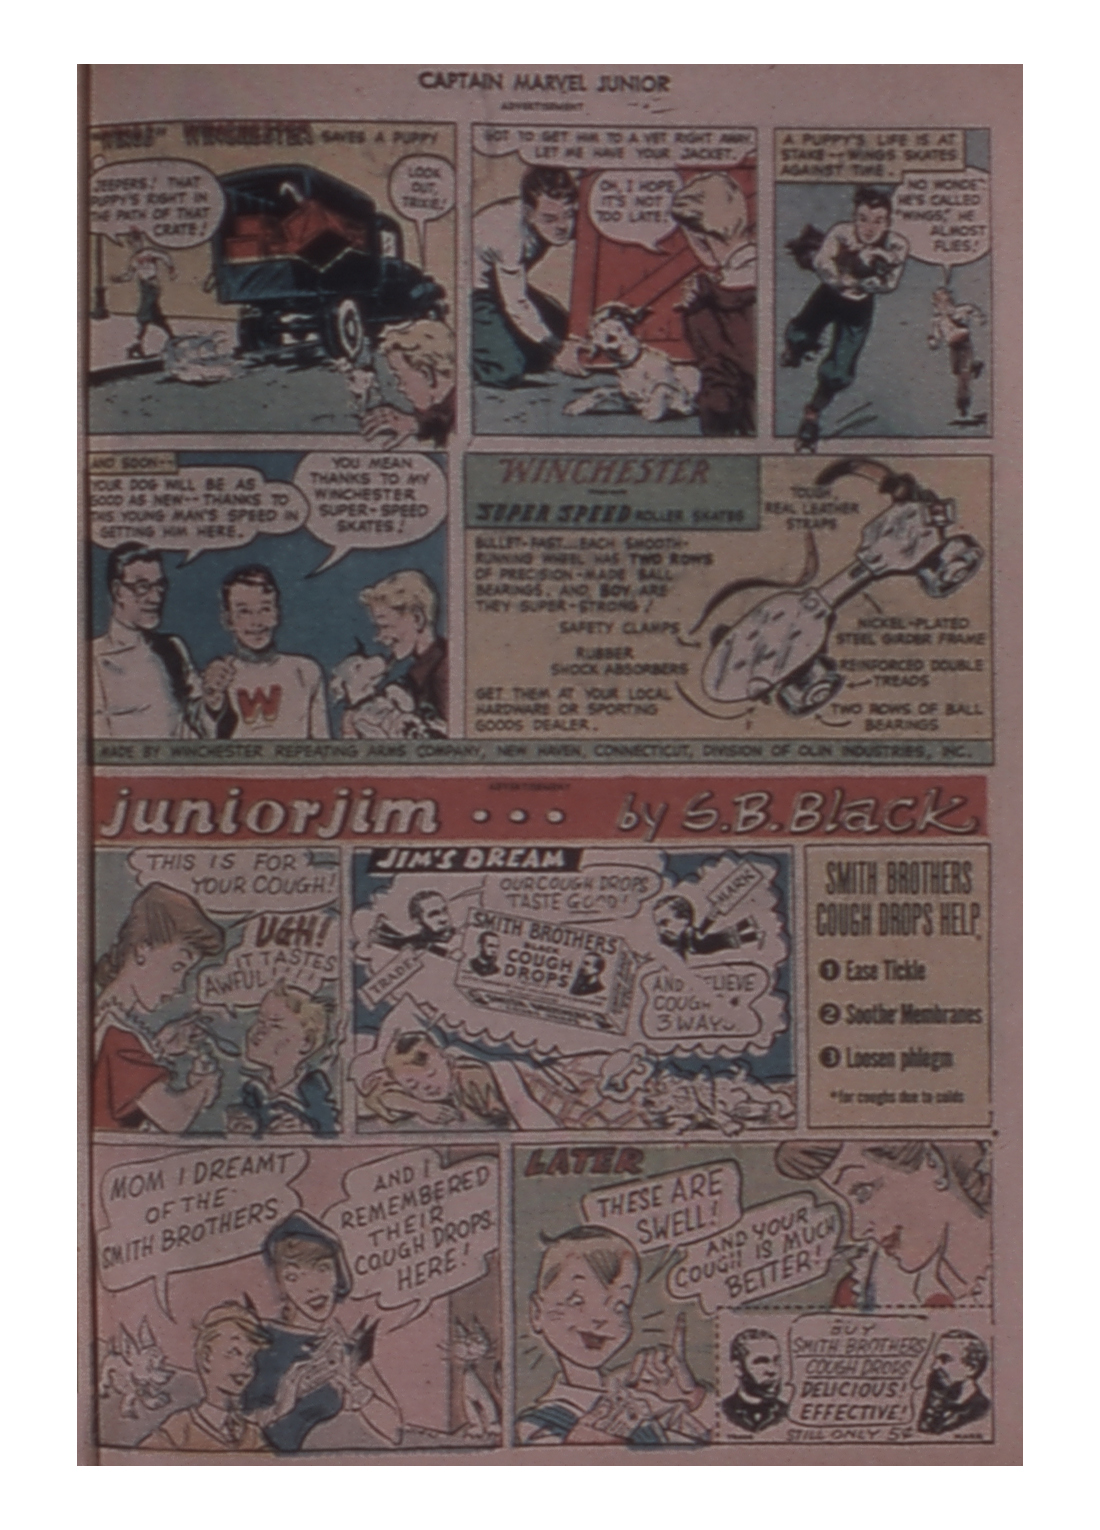 Read online Captain Marvel, Jr. comic -  Issue #57 - 49